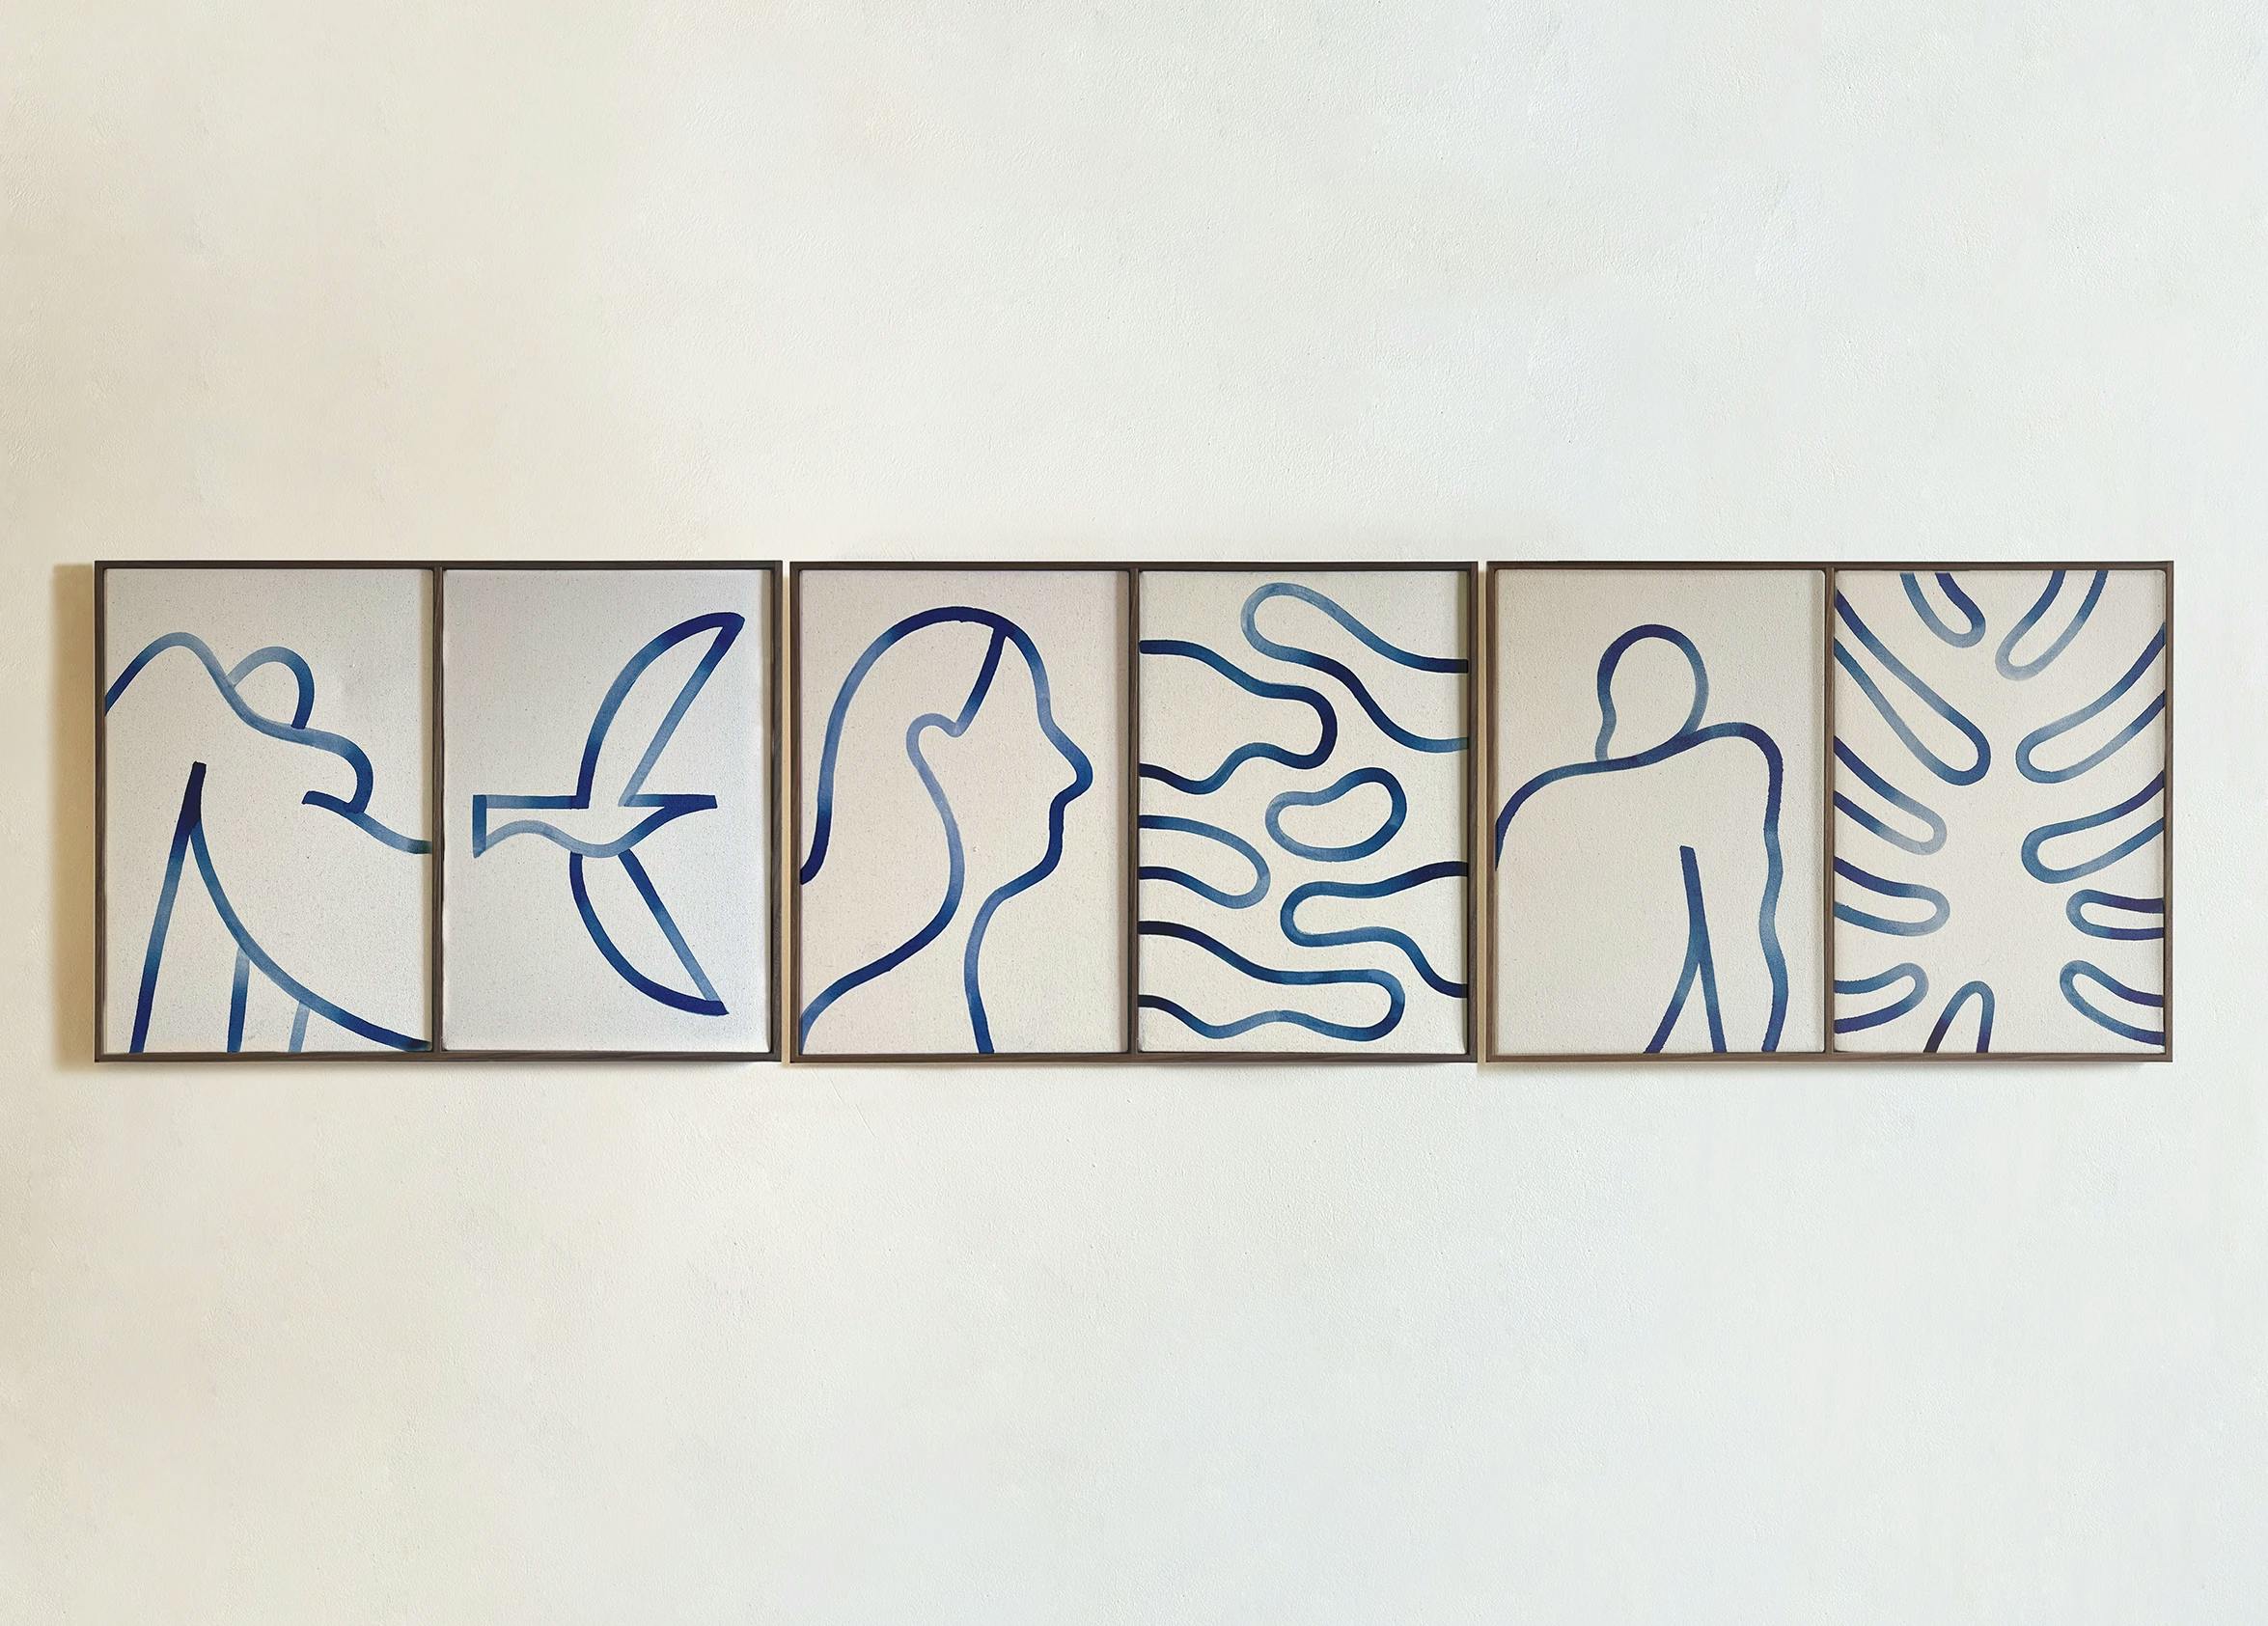 A row of three diptychs made from thin, blue brushstrokes by artist Lourenço Providência.